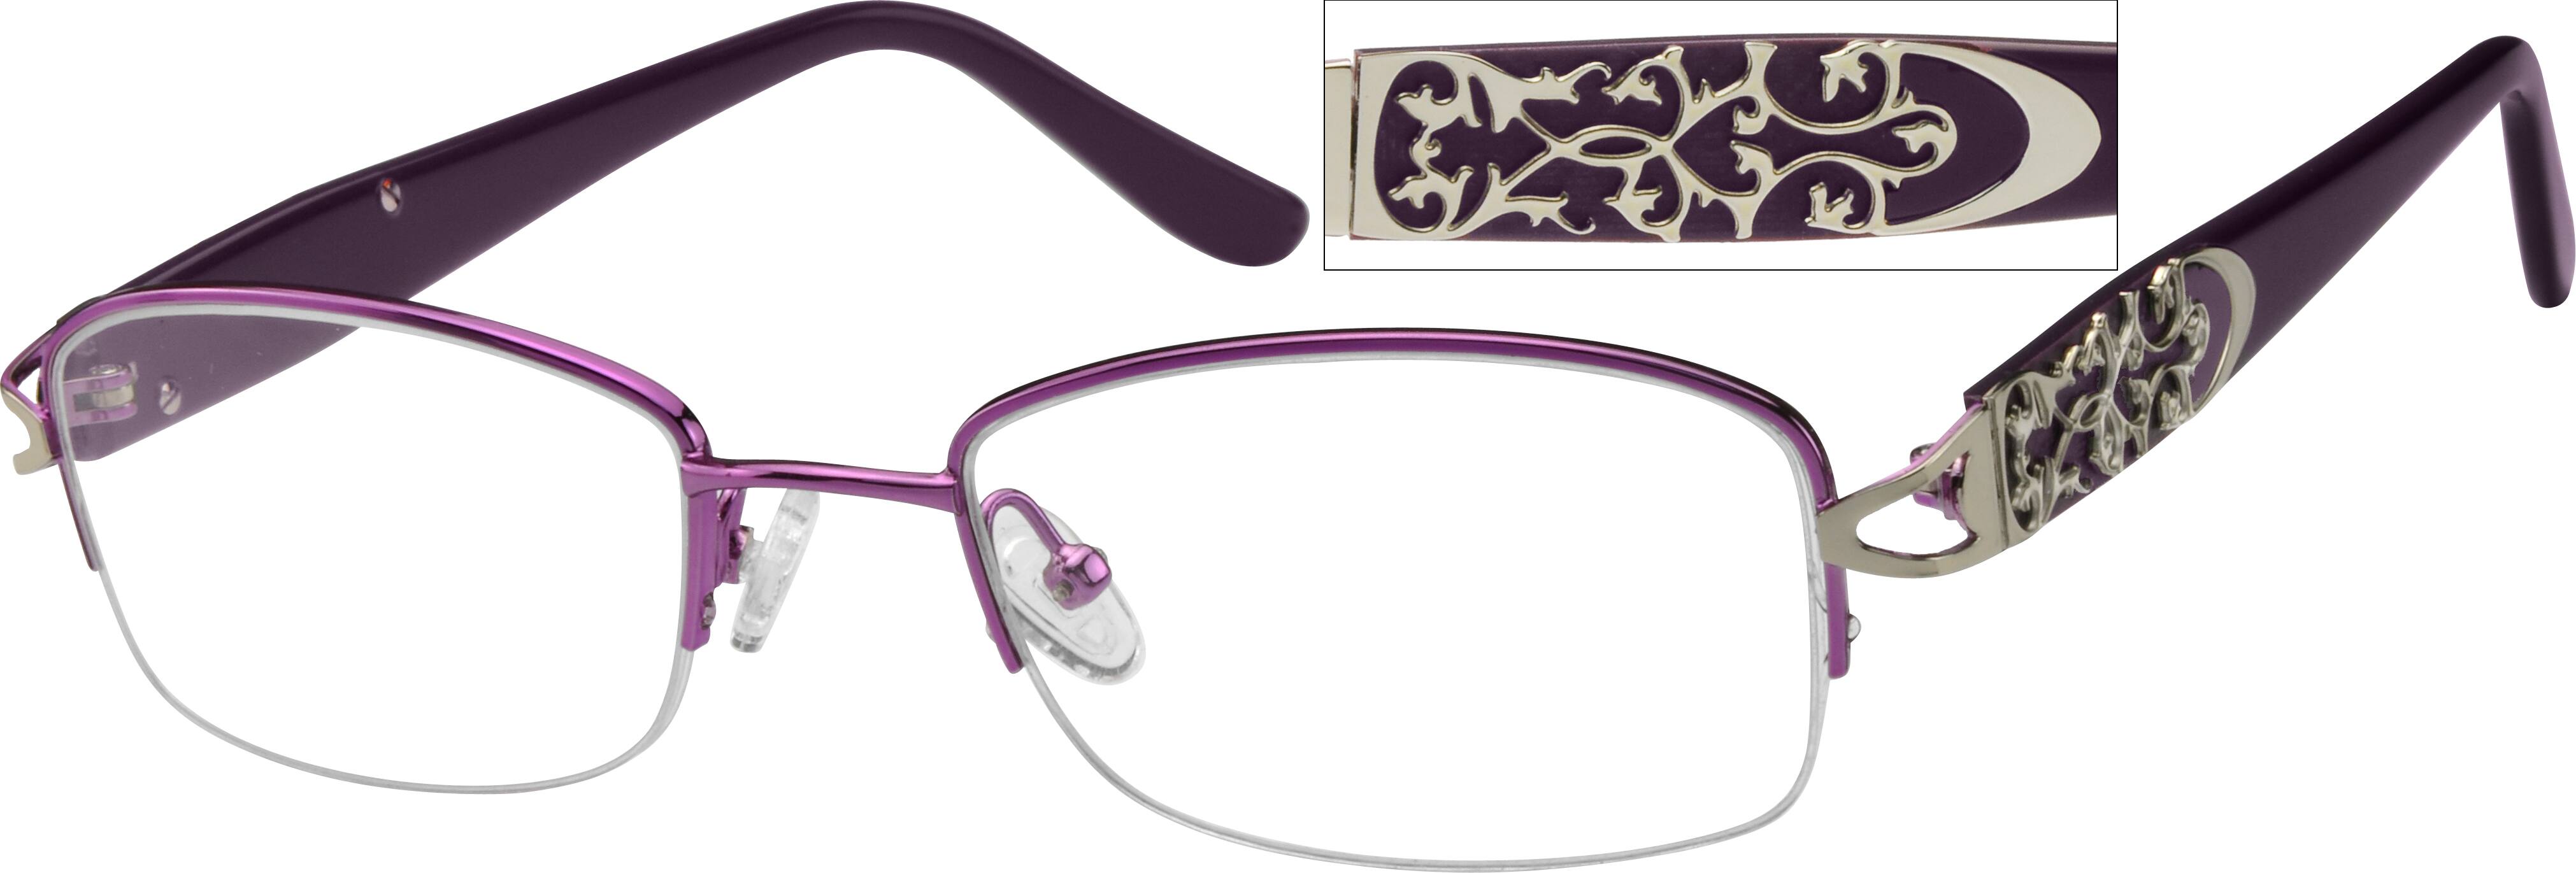 Purple Stainless Steel Half Rim Frame With Acetate Temples 9326 Zenni Optical Eyeglasses